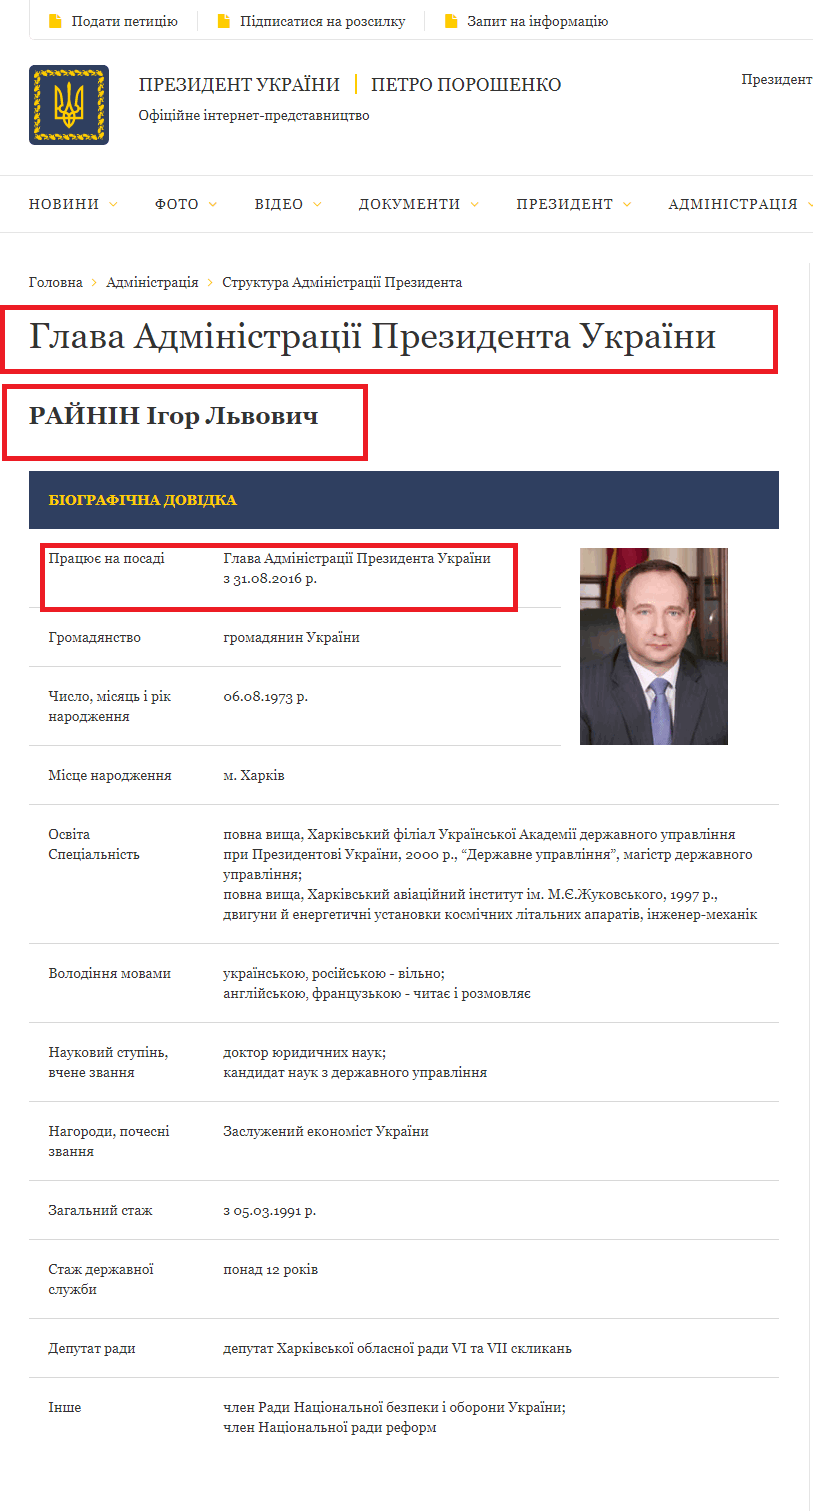 http://www.president.gov.ua/administration/apu-structure/glava-administraciyi-prezidenta-ukrayini